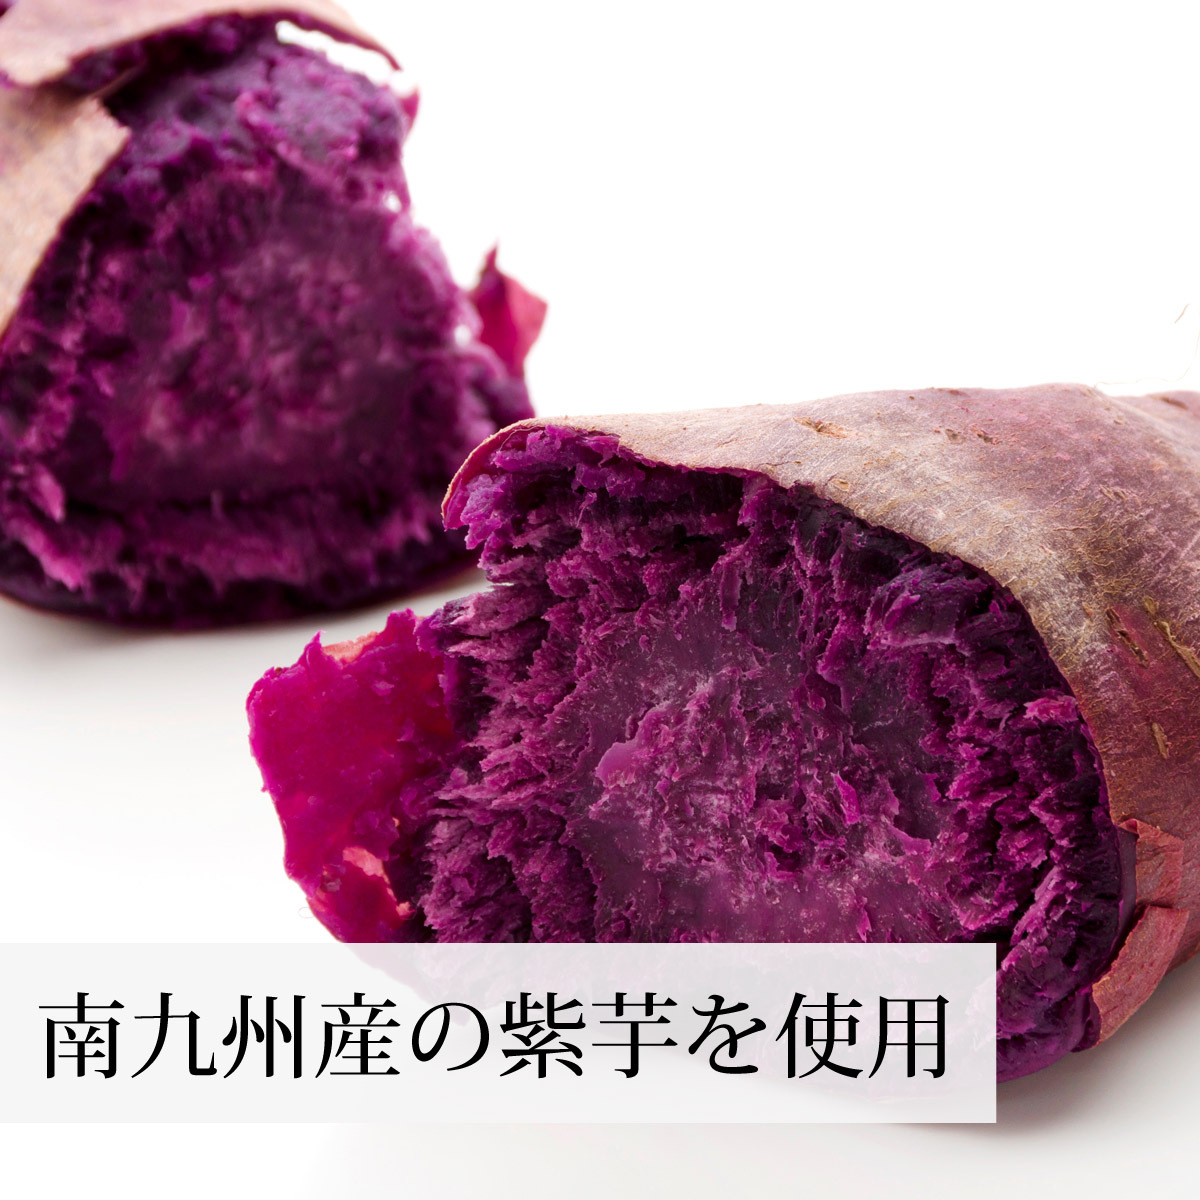  purple corm powder 1kg purple .. powder business use ...... no addition domestic production 